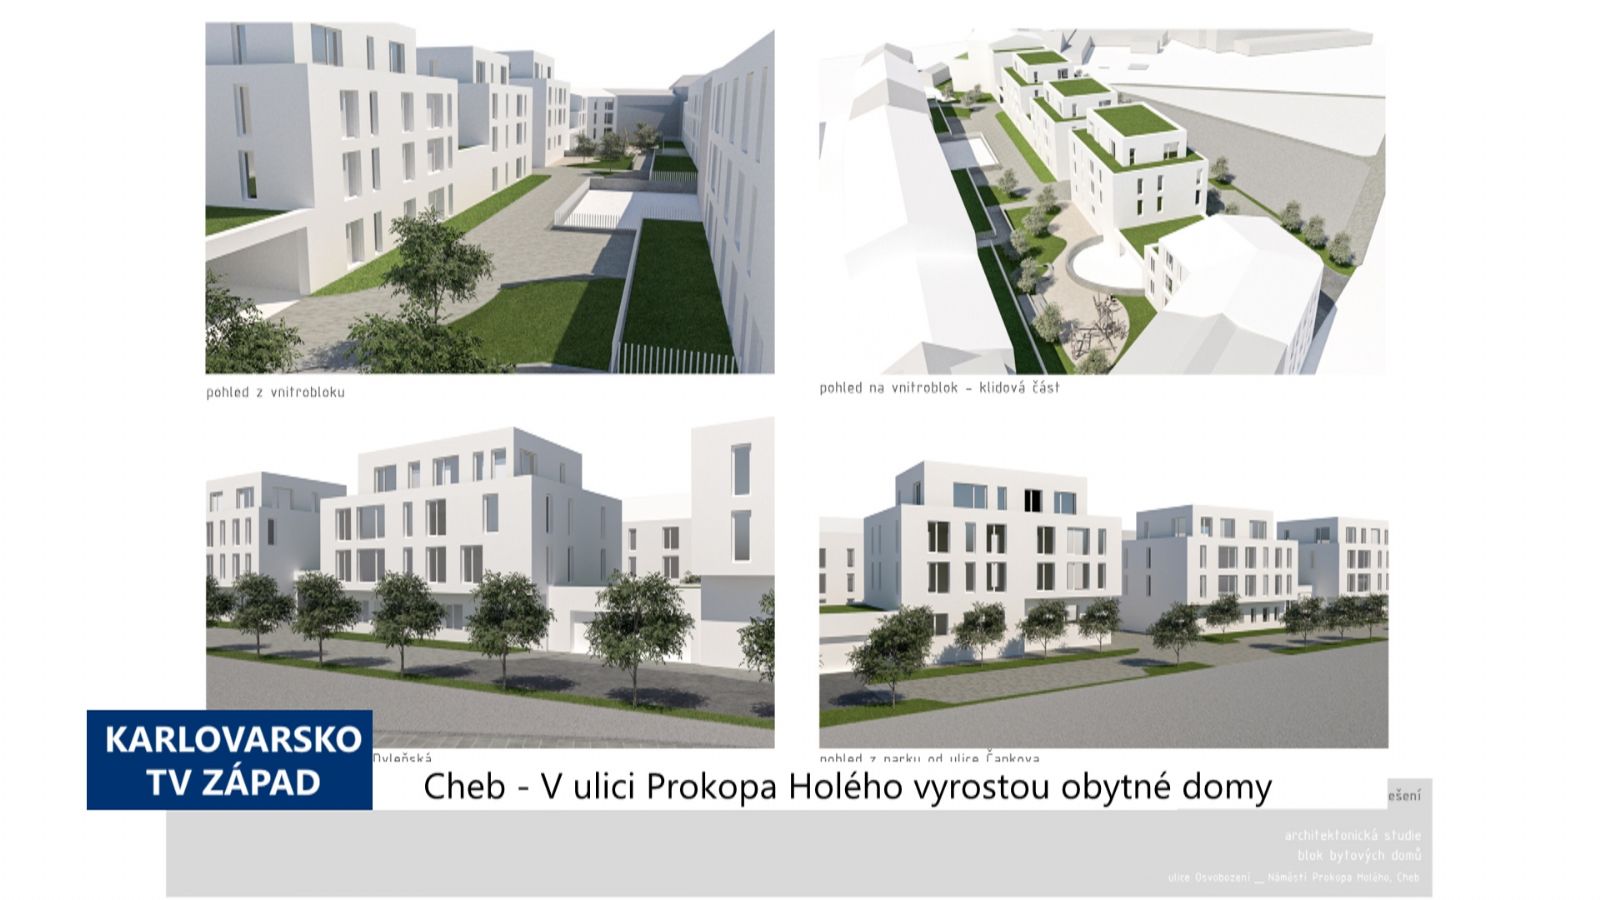 Cheb: V ulici Prokopa Holého vyrostou obytné domy (TV Západ)